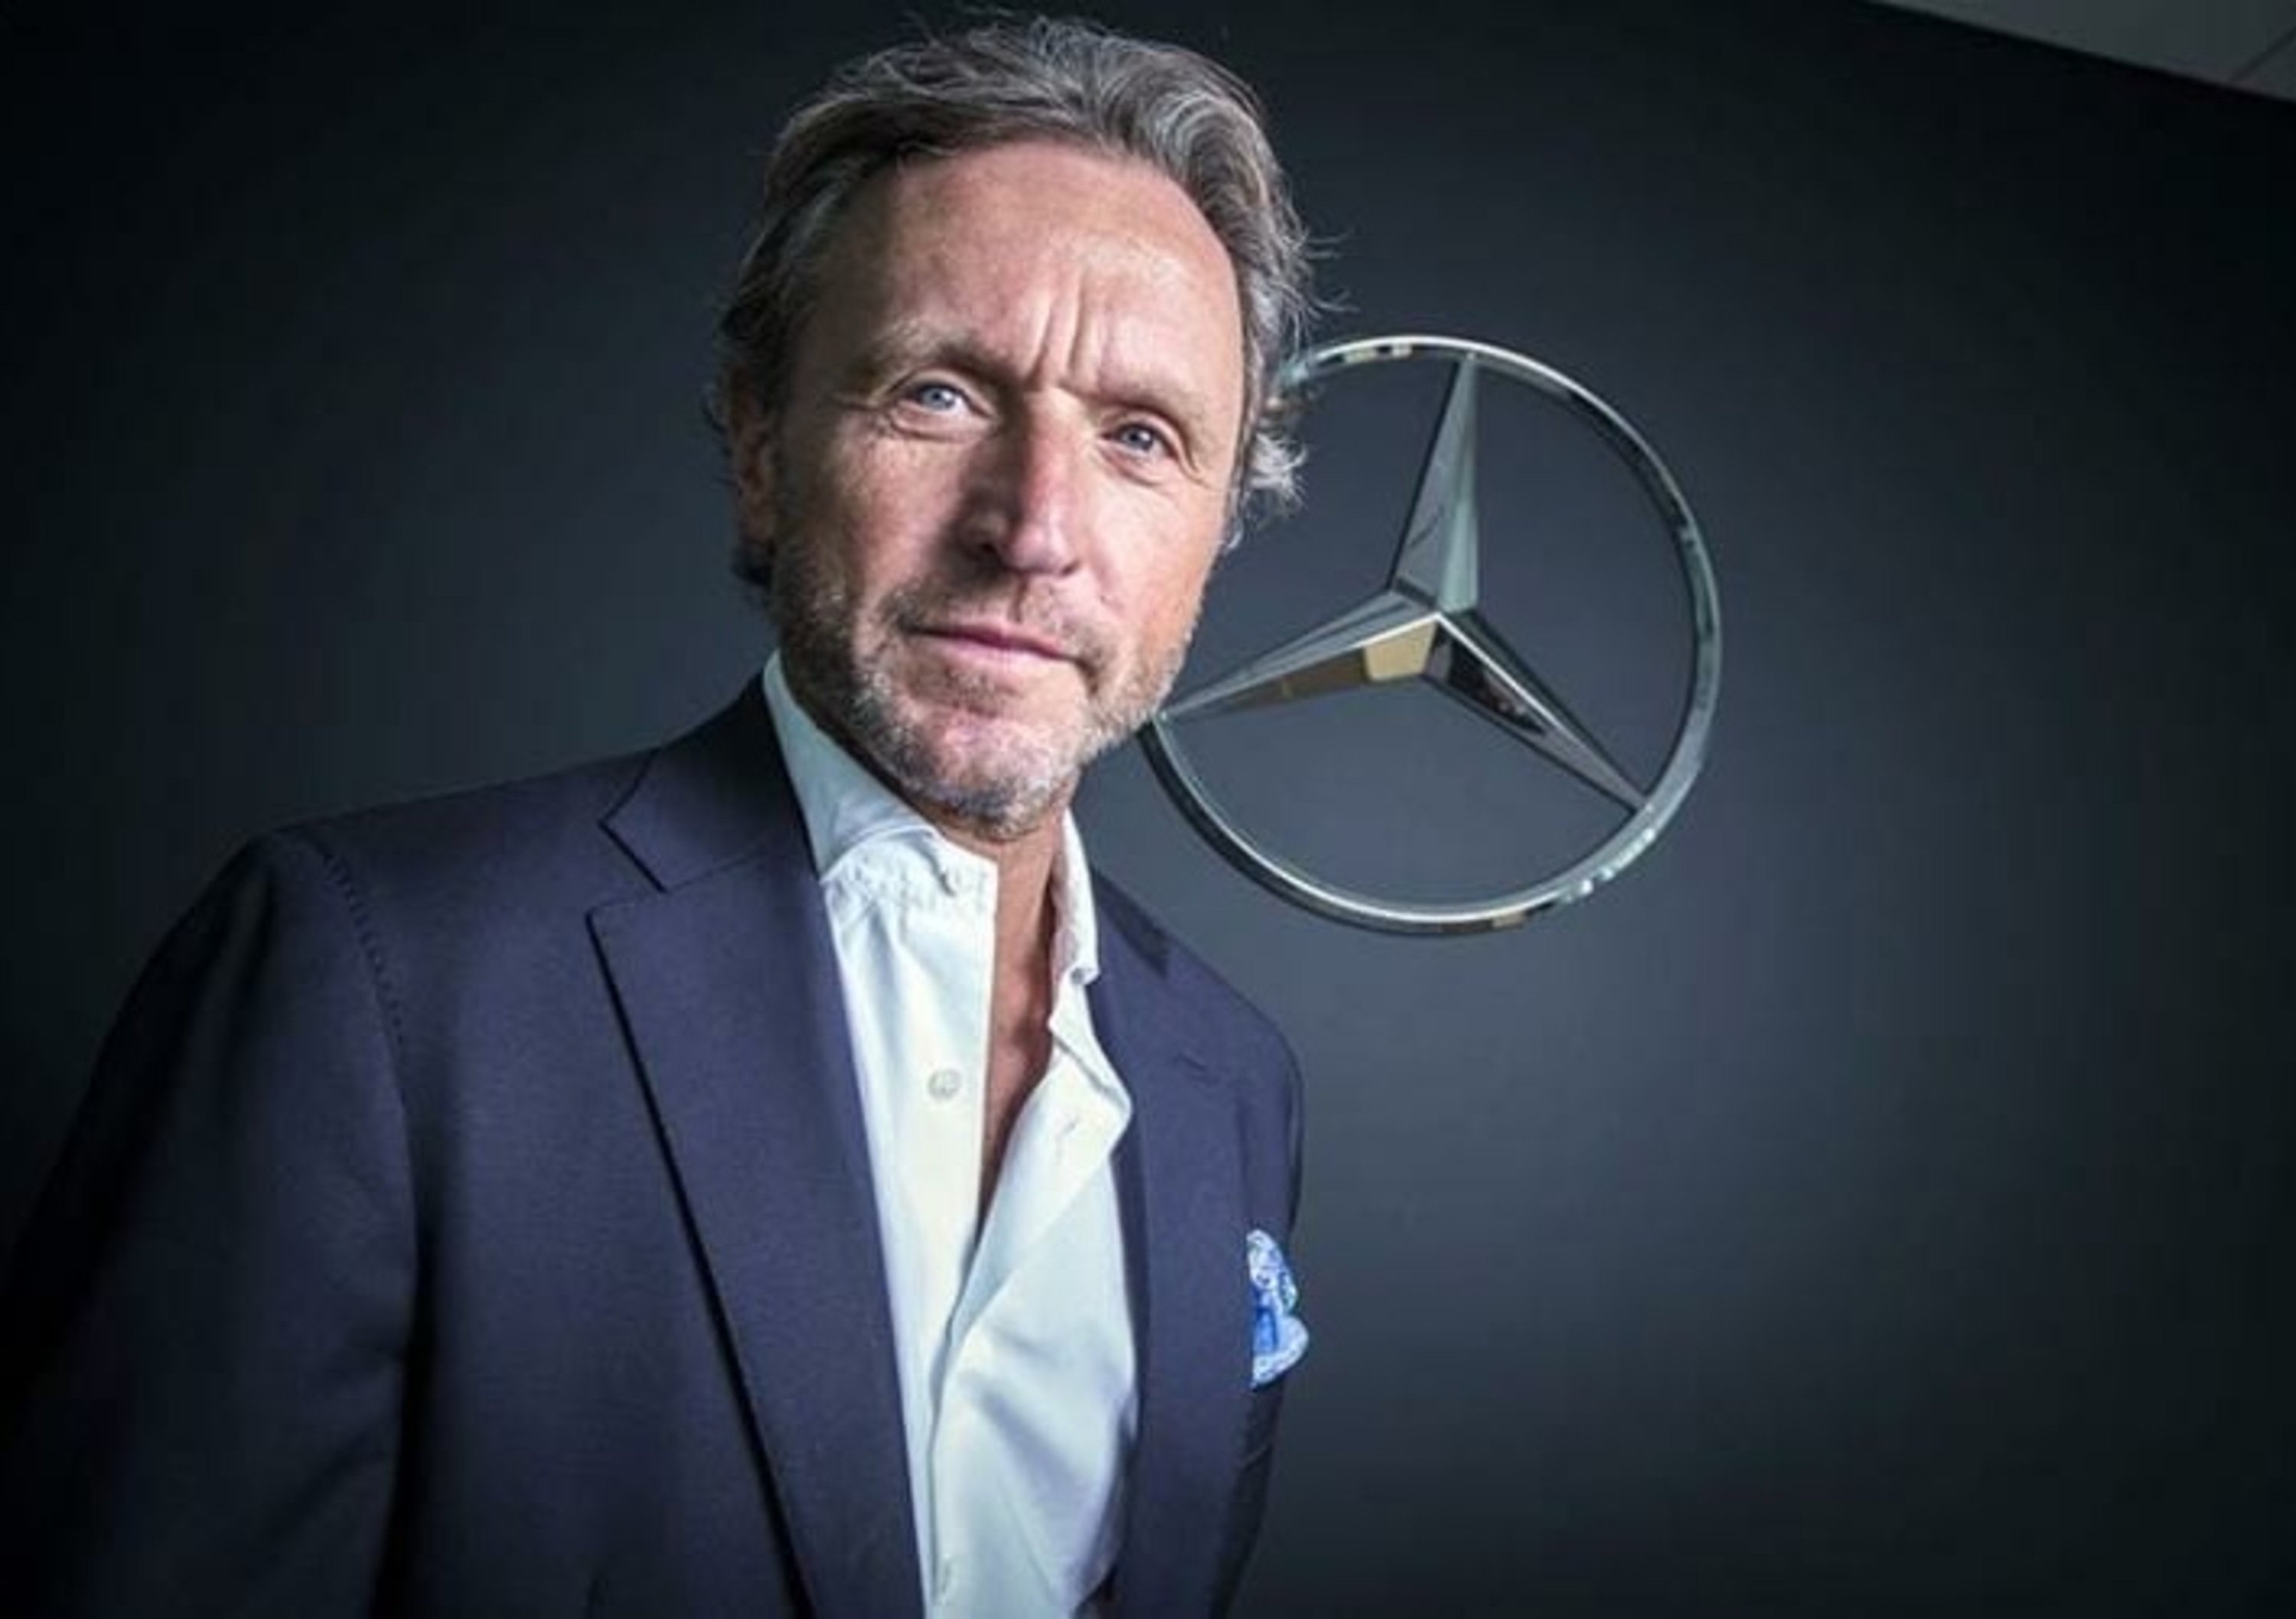 Radek Jelinek alla guida di Mercedes Italia